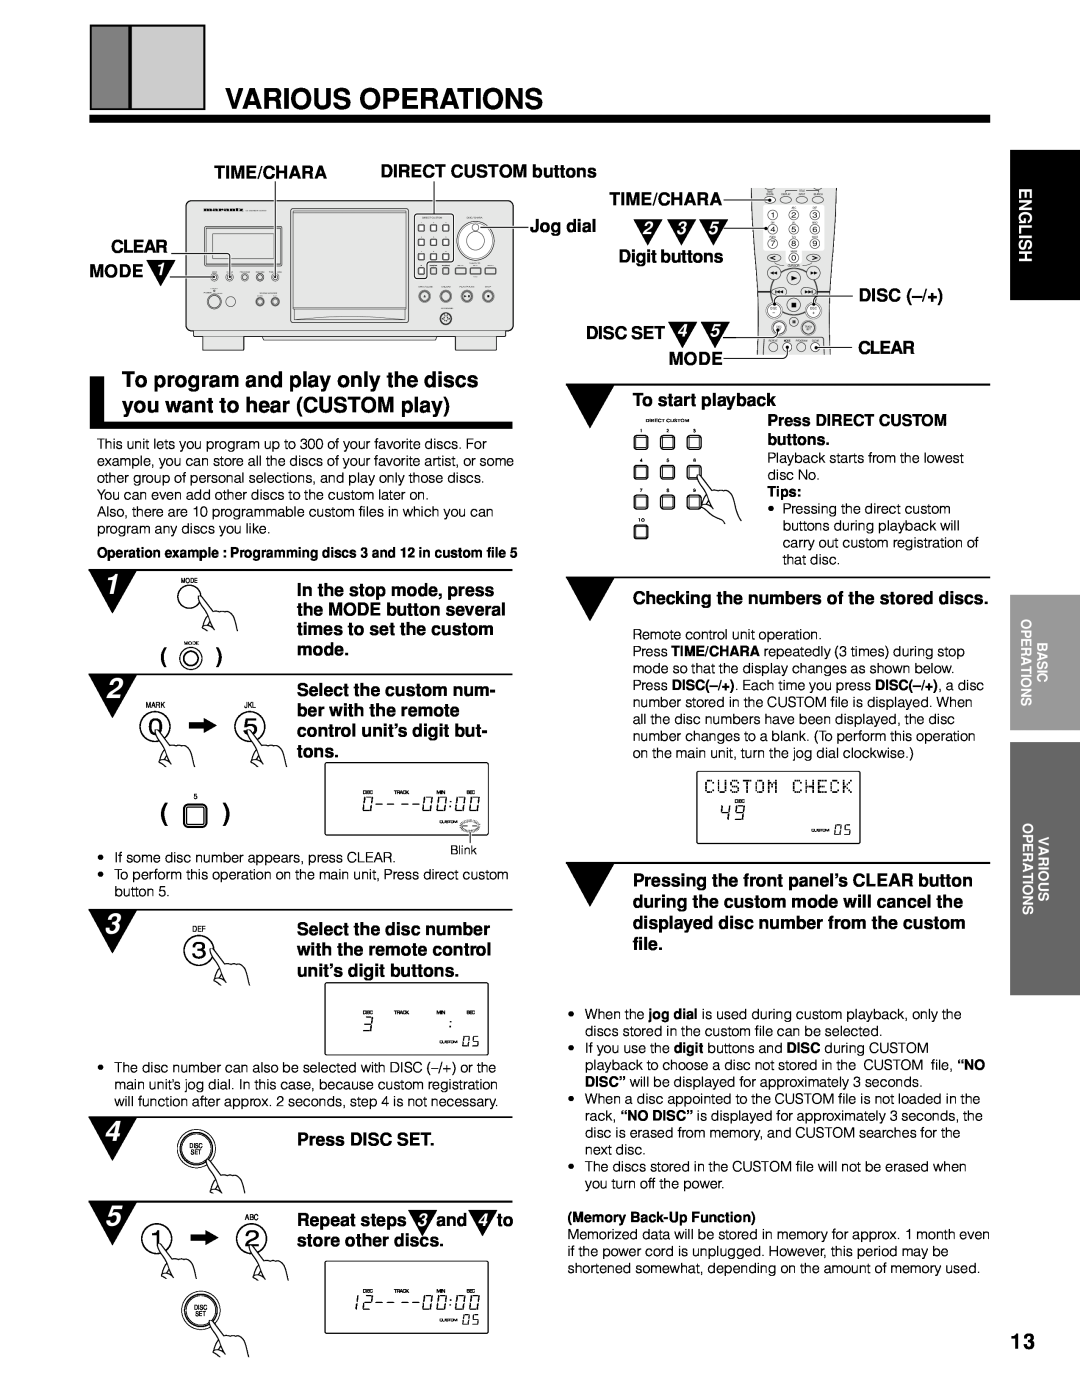 Marantz CC9100 manual Various Operations, English 